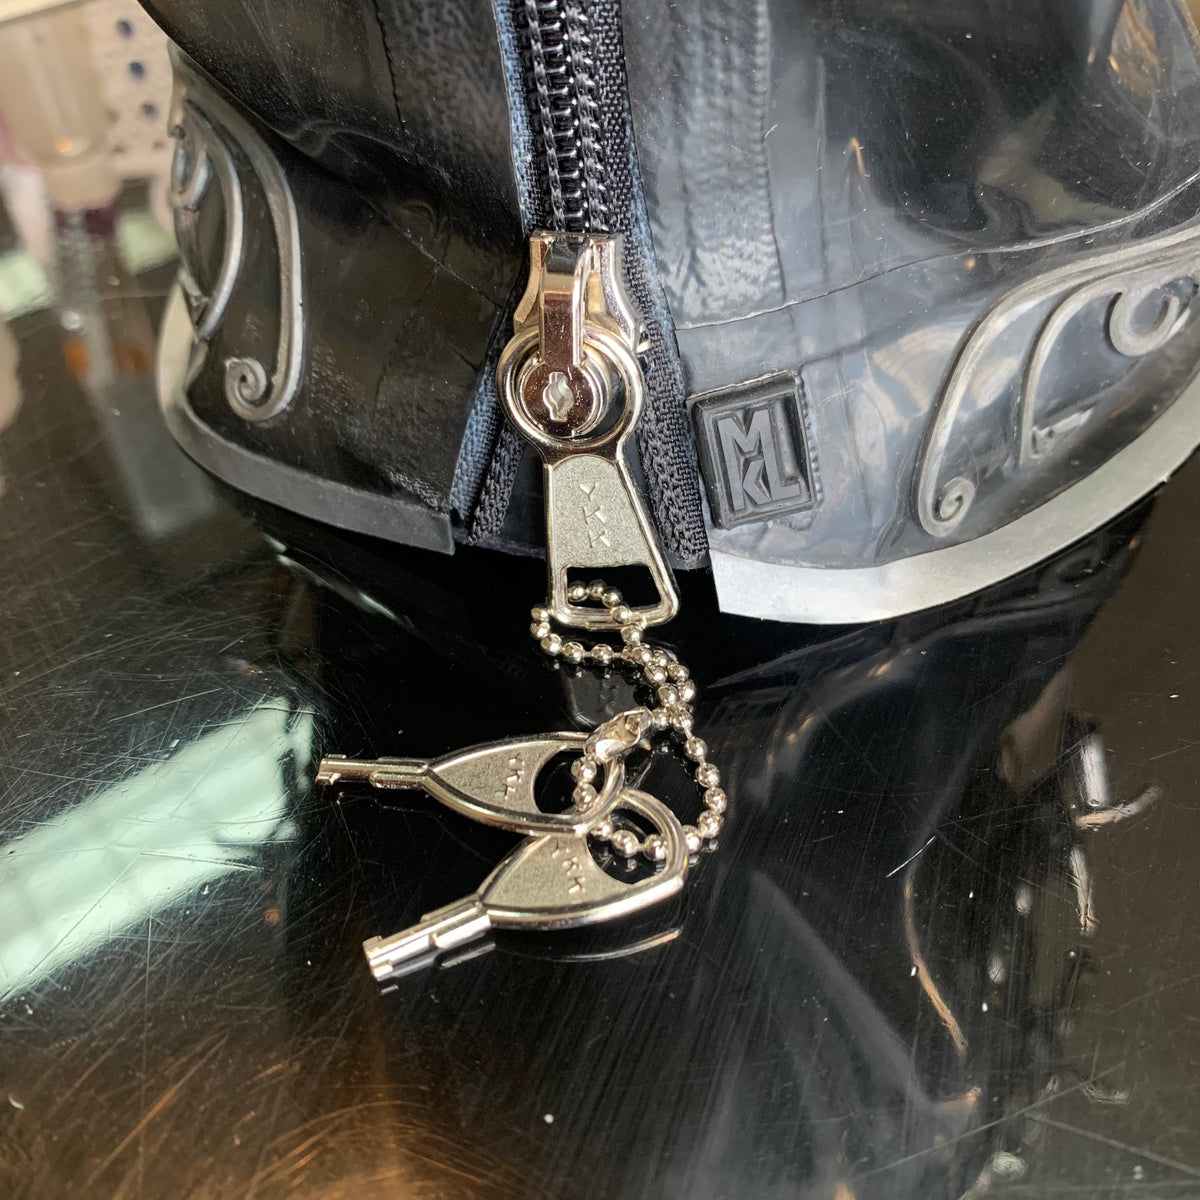 Duchess hood with locking zipper